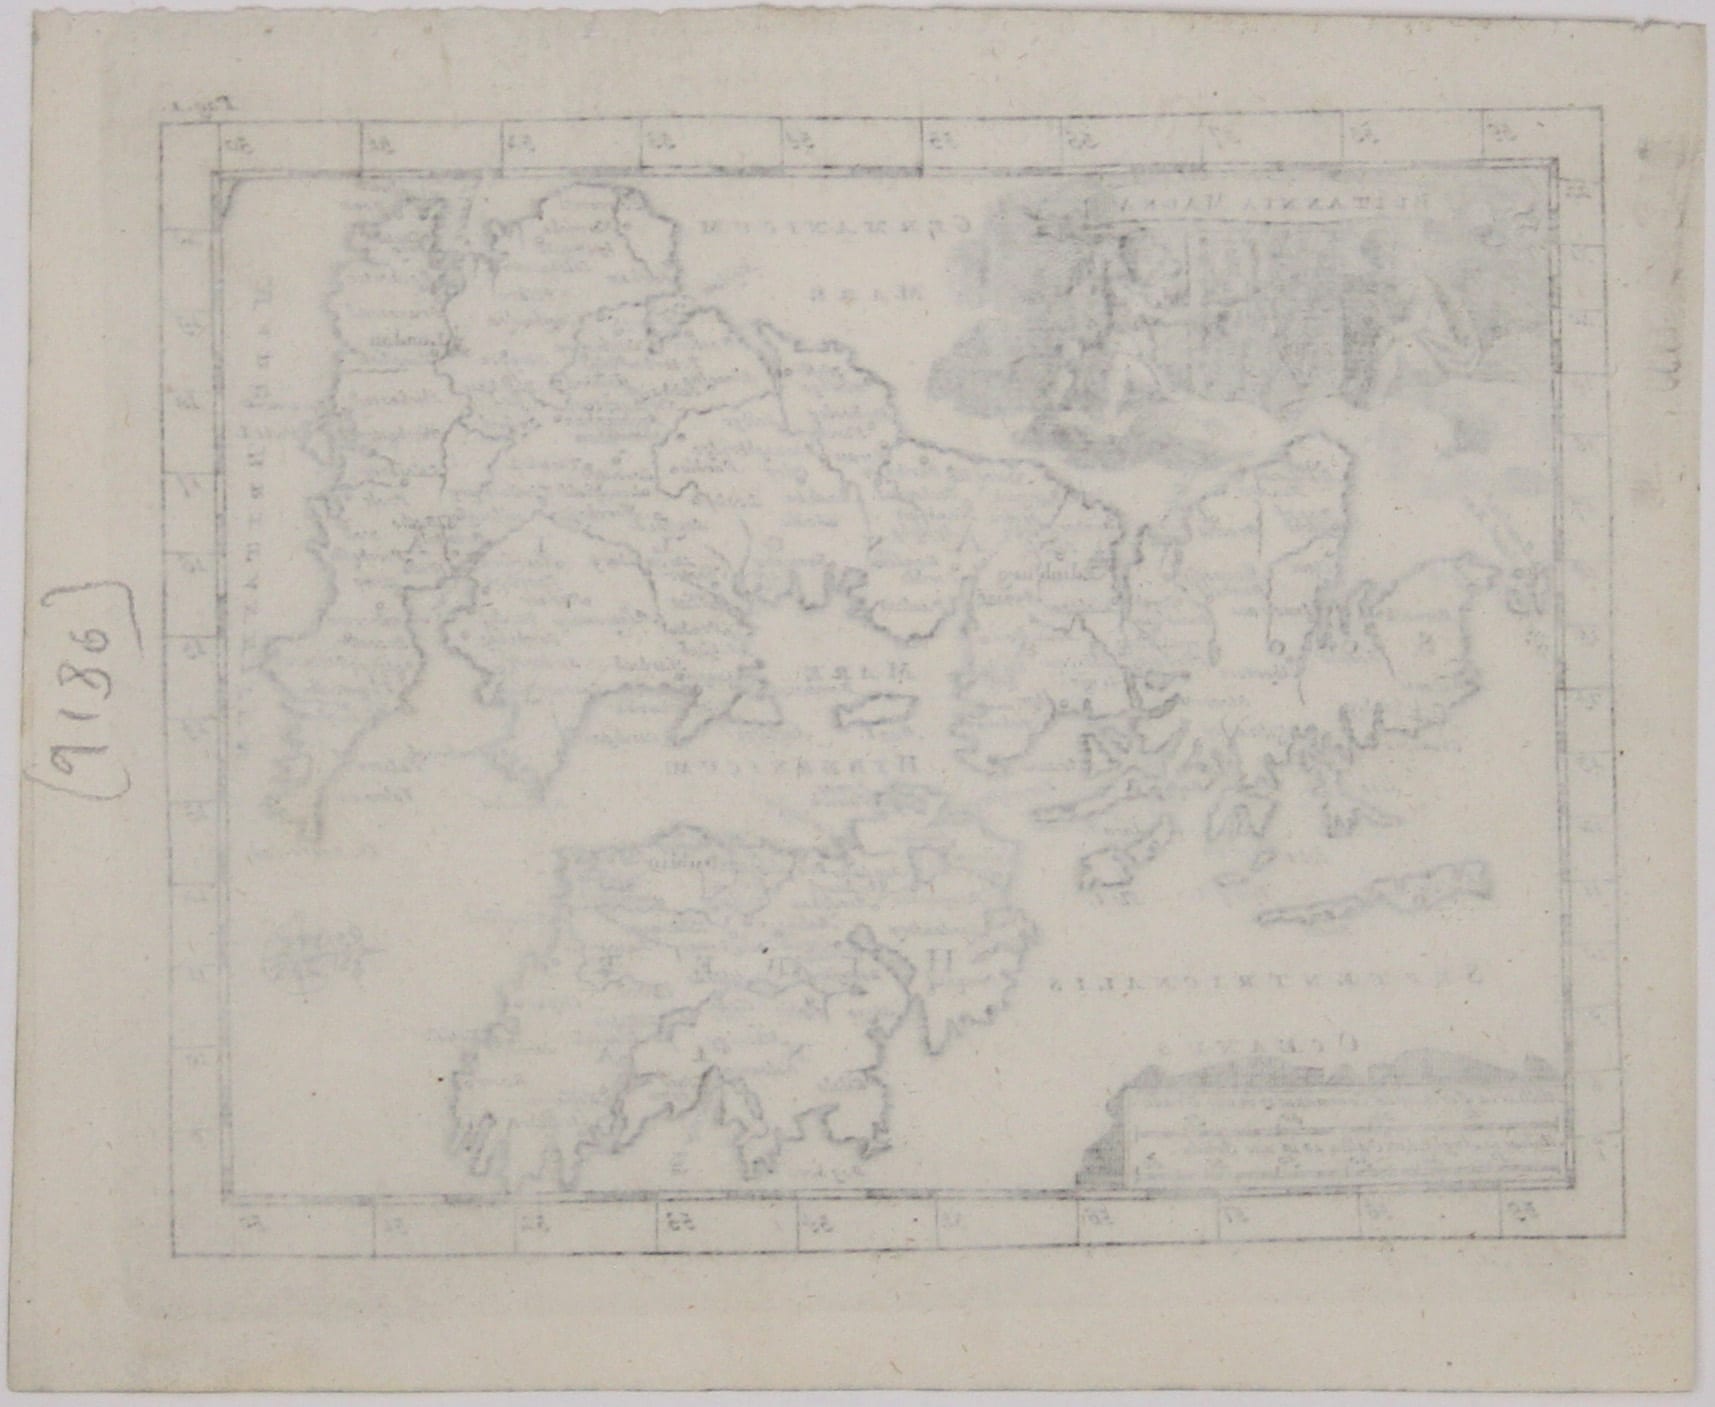 Van der Aa’s Miniature Map of the British Isles